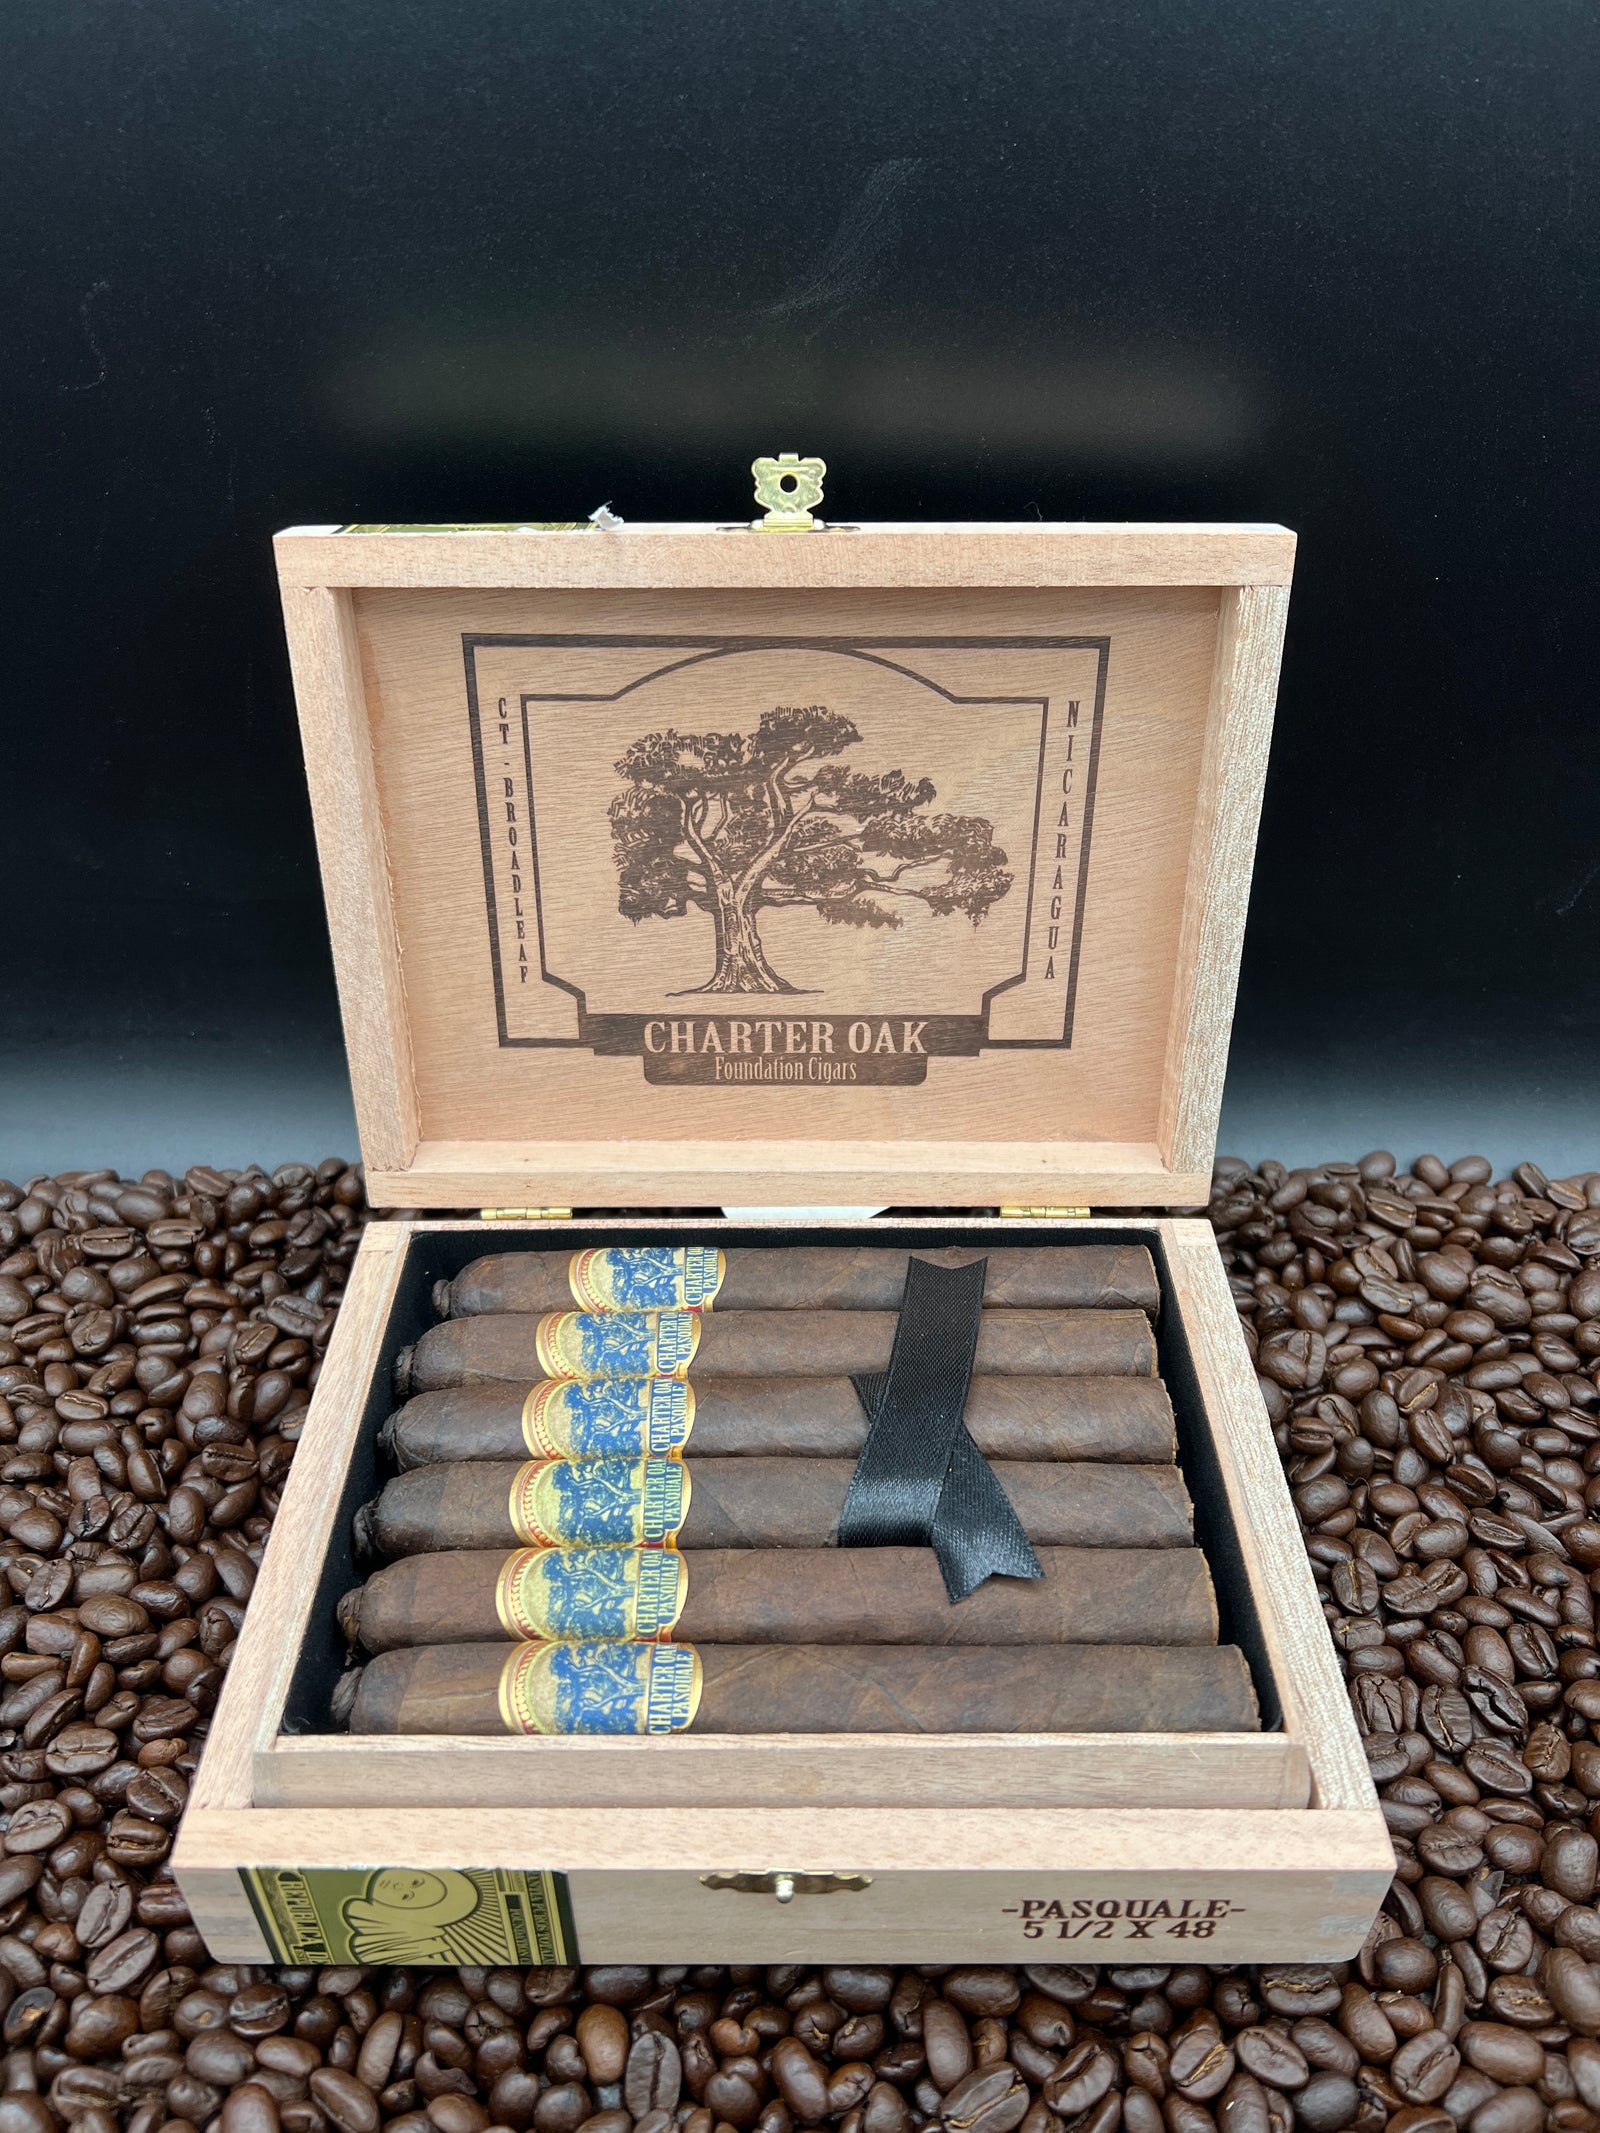 Foundation Cigars - Charter Oak Especiales Pasquale